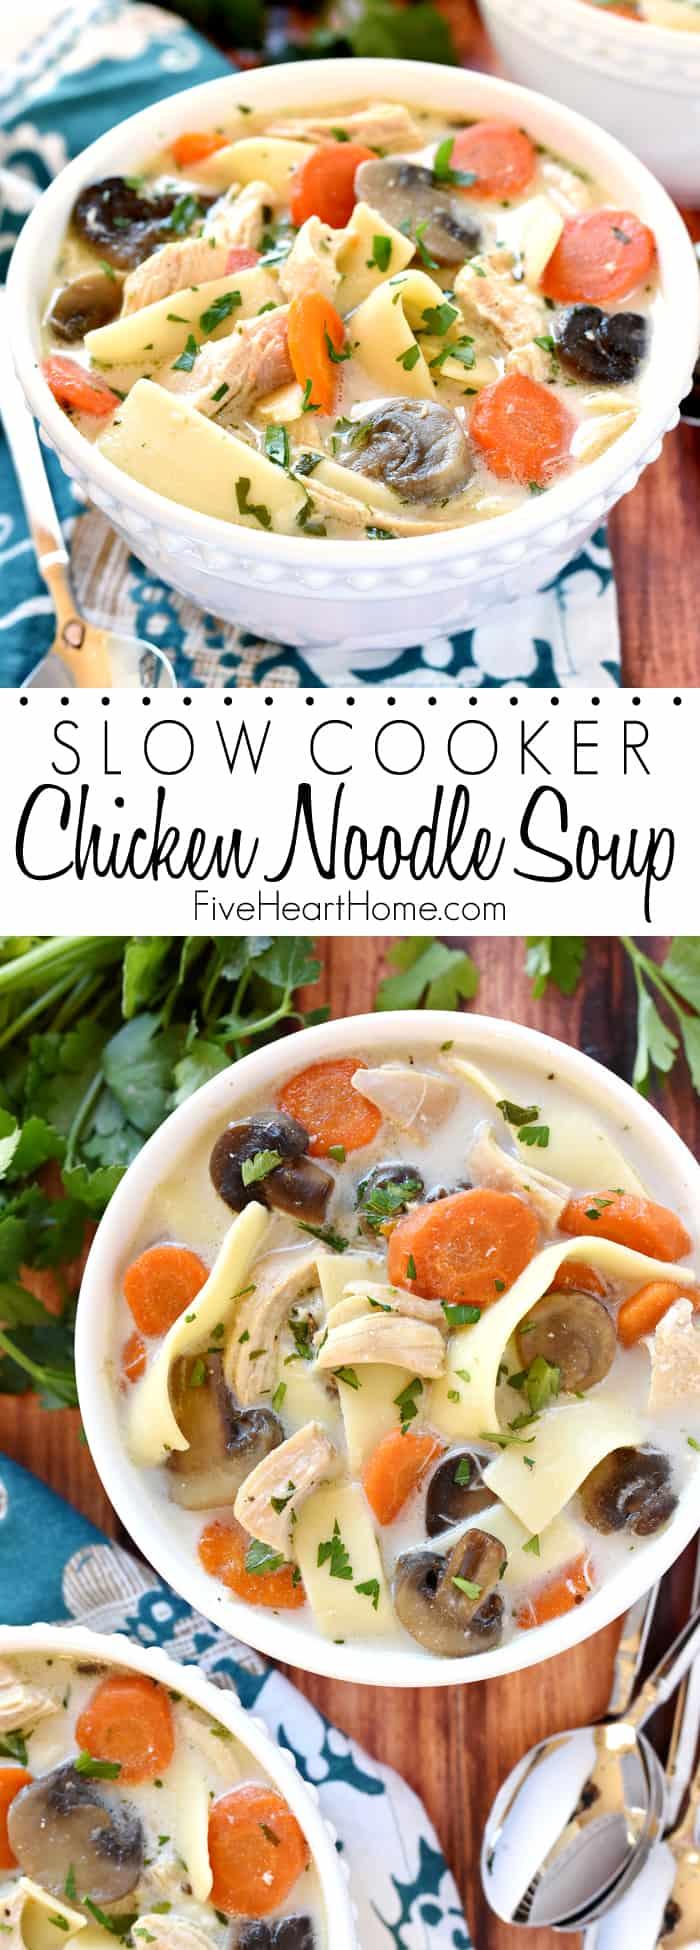 Crockpot Chicken Noodle Soup • Salt & Lavender